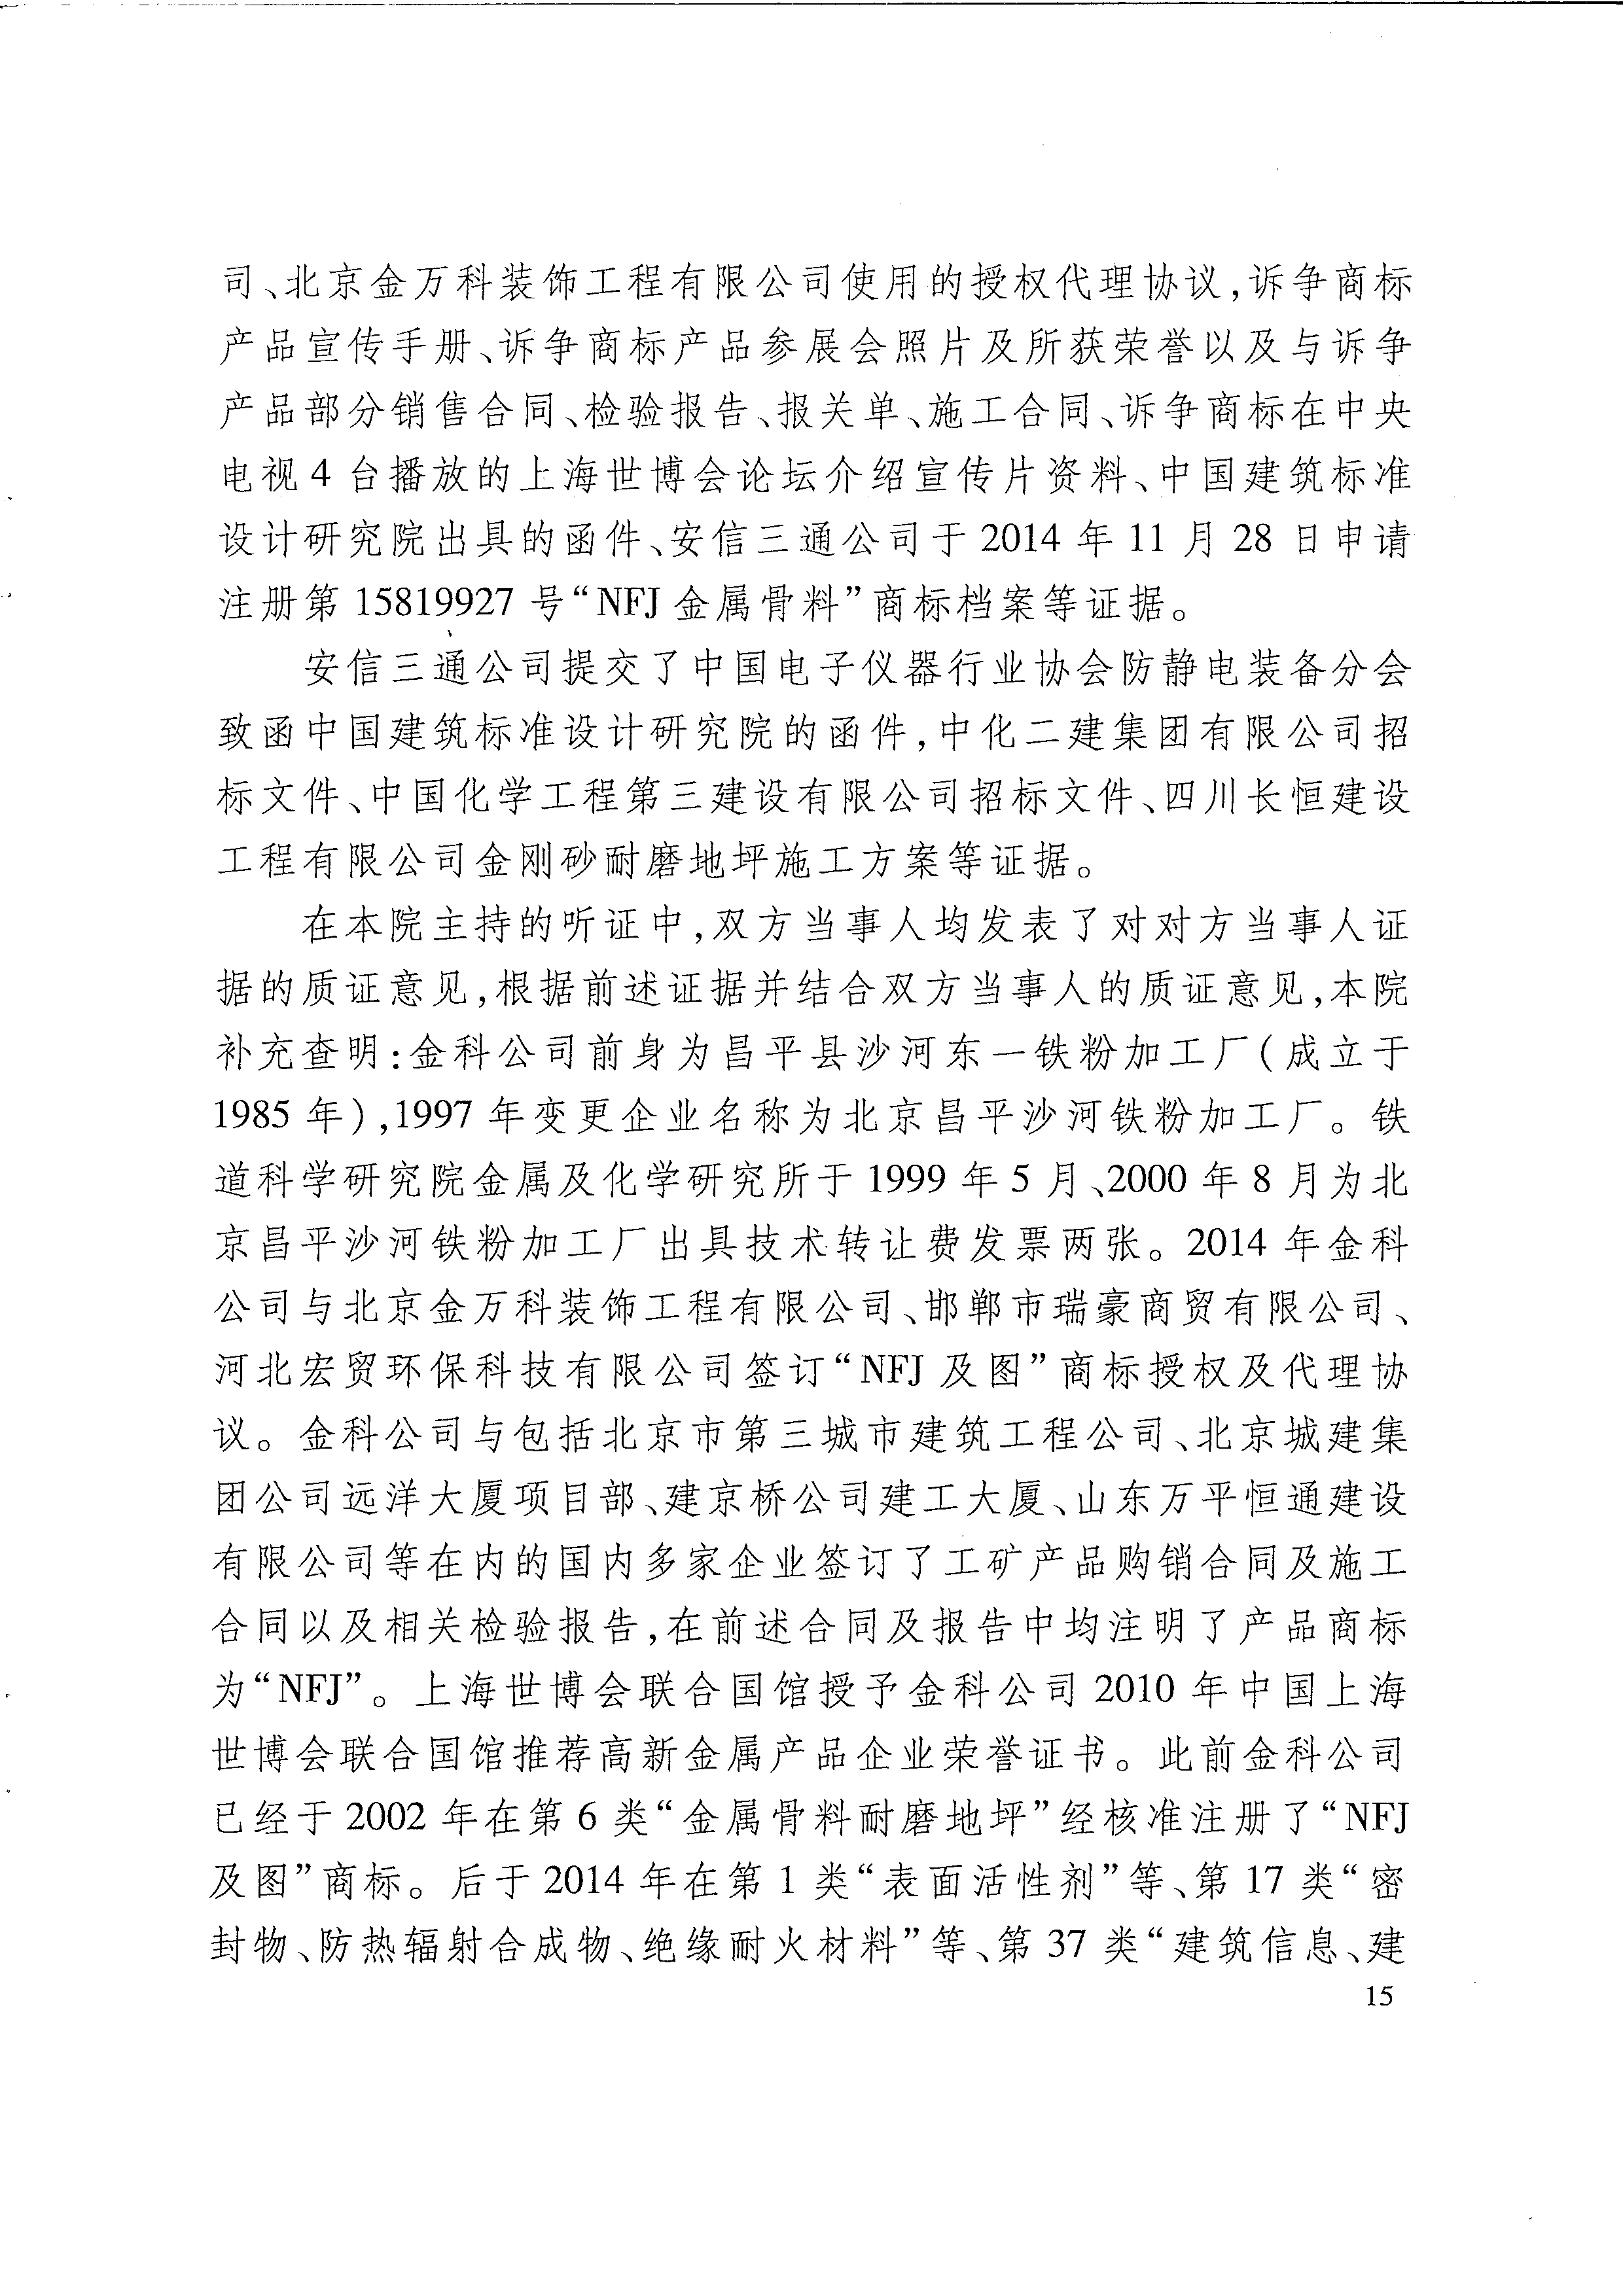 再审行政判决书(1)_Page_15.png